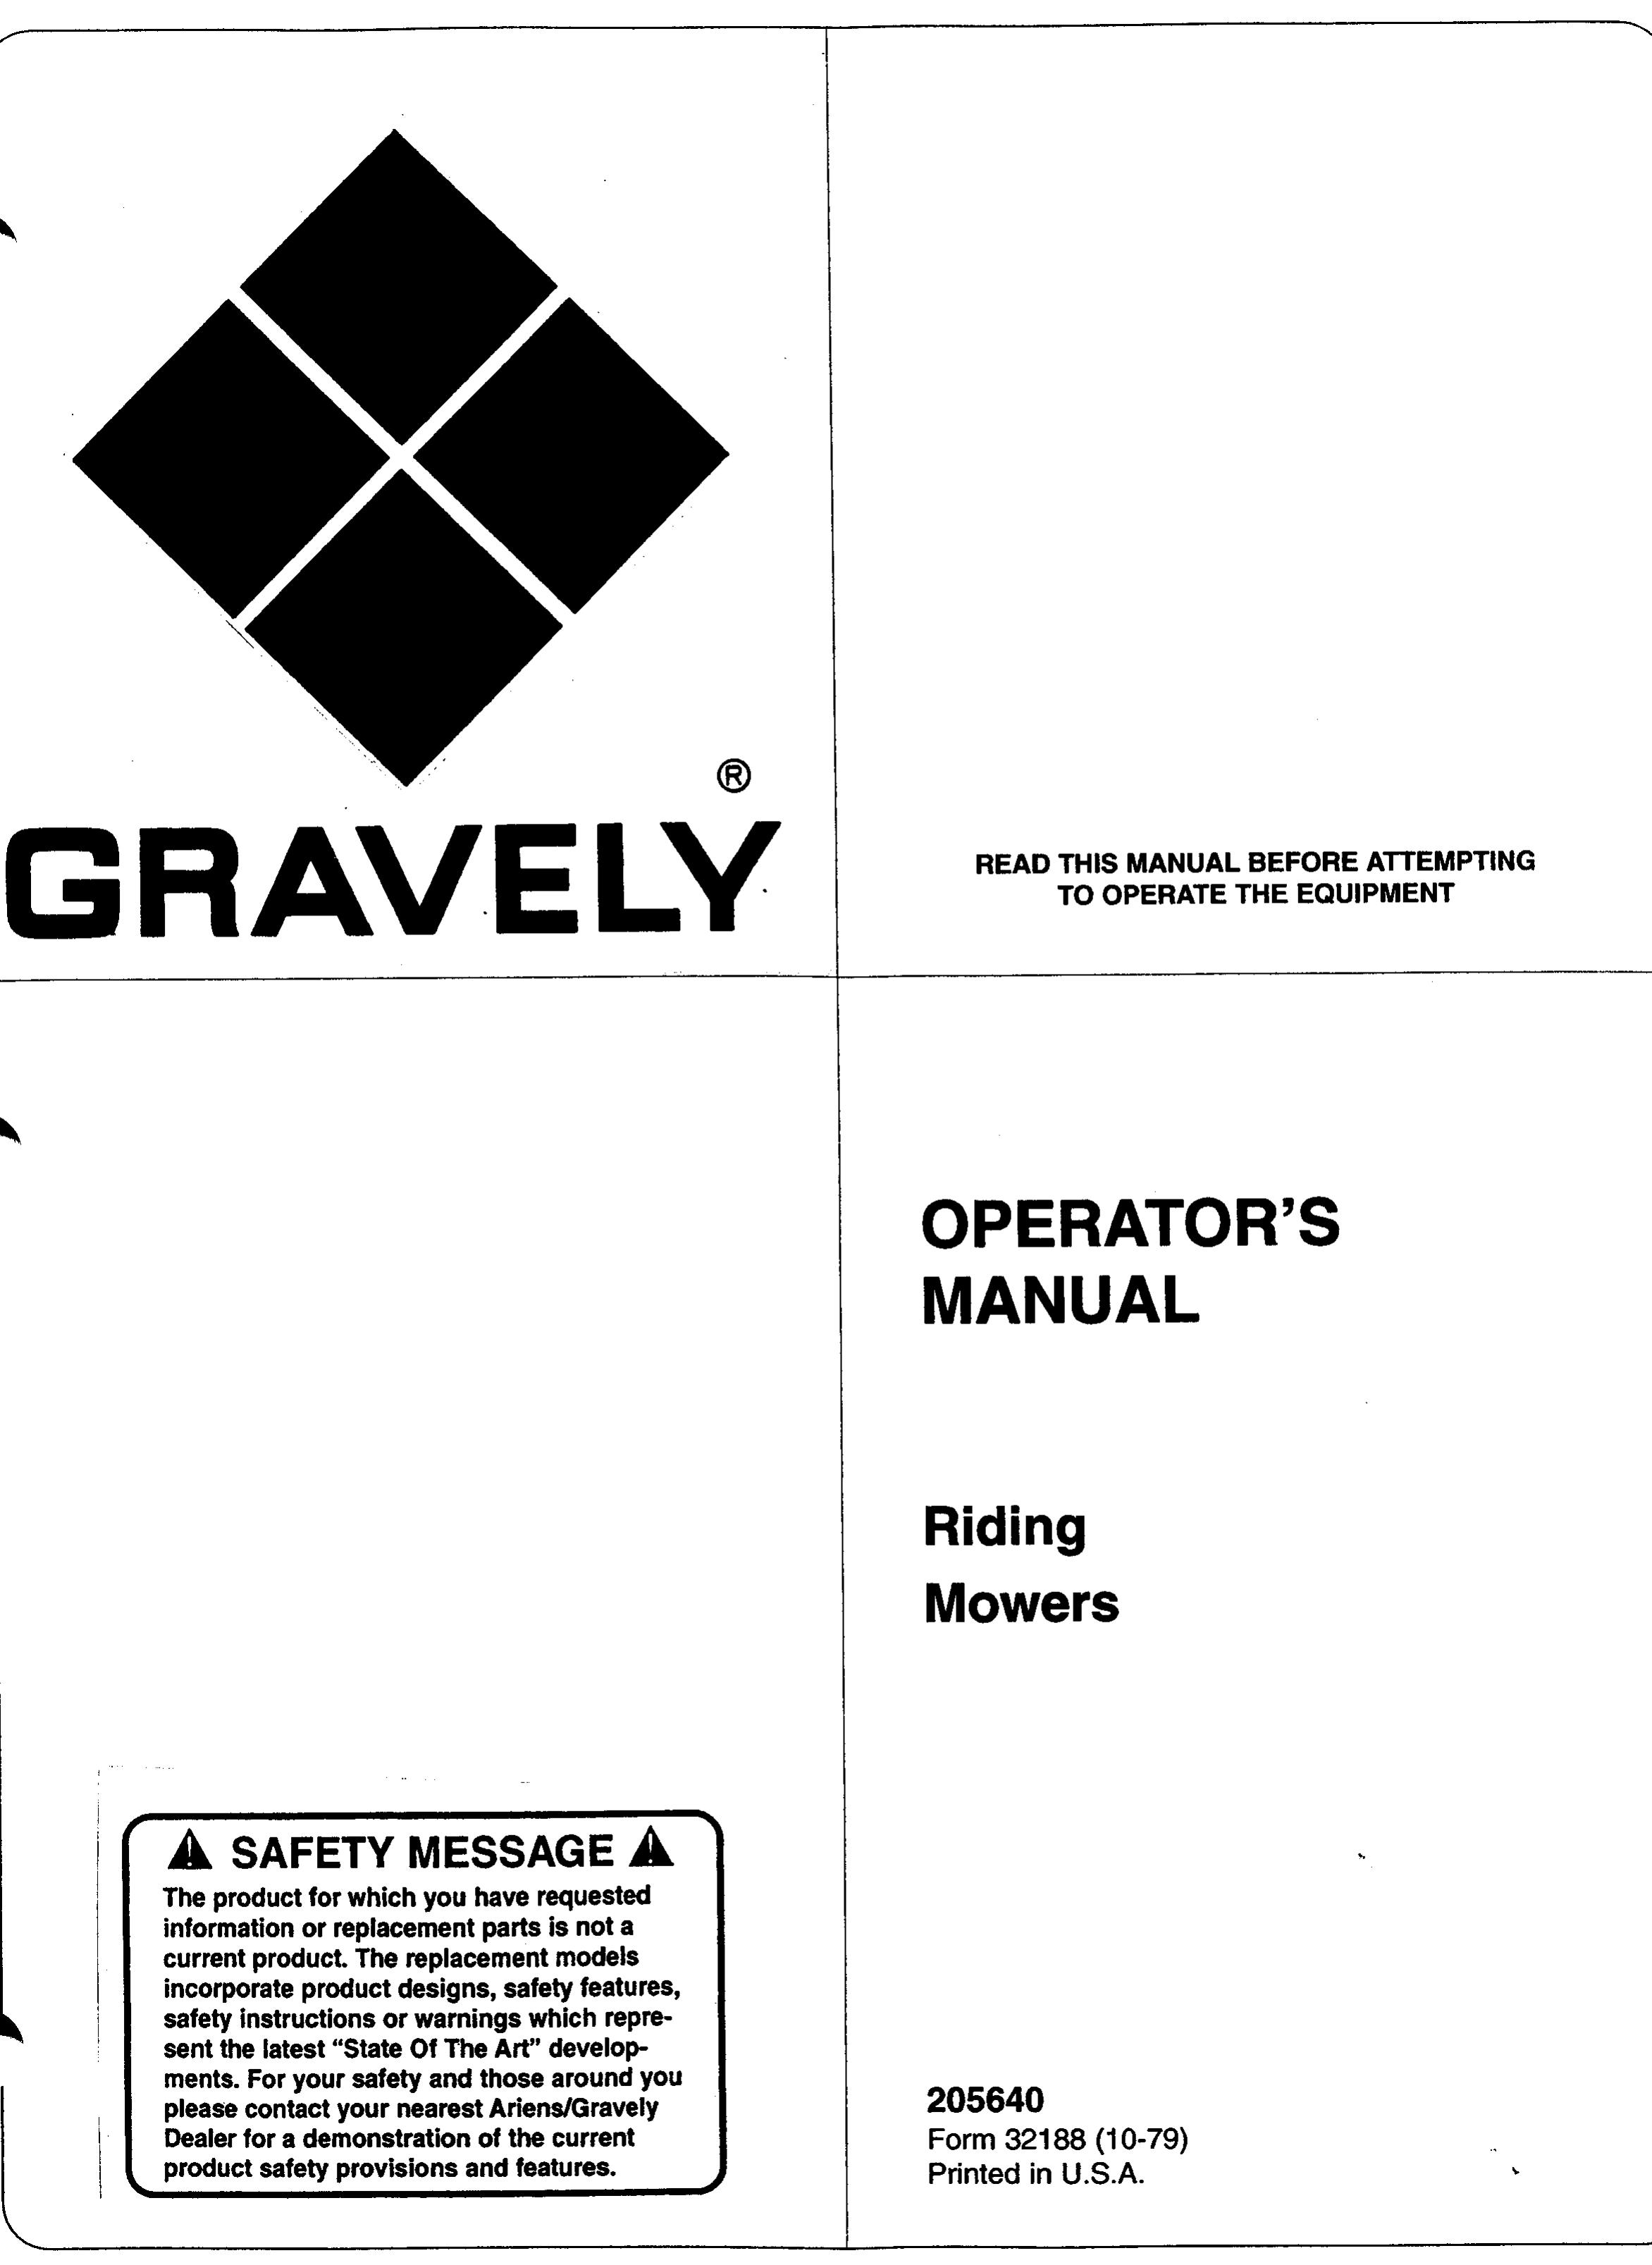 Gravely 205640 Lawn Mower User Manual